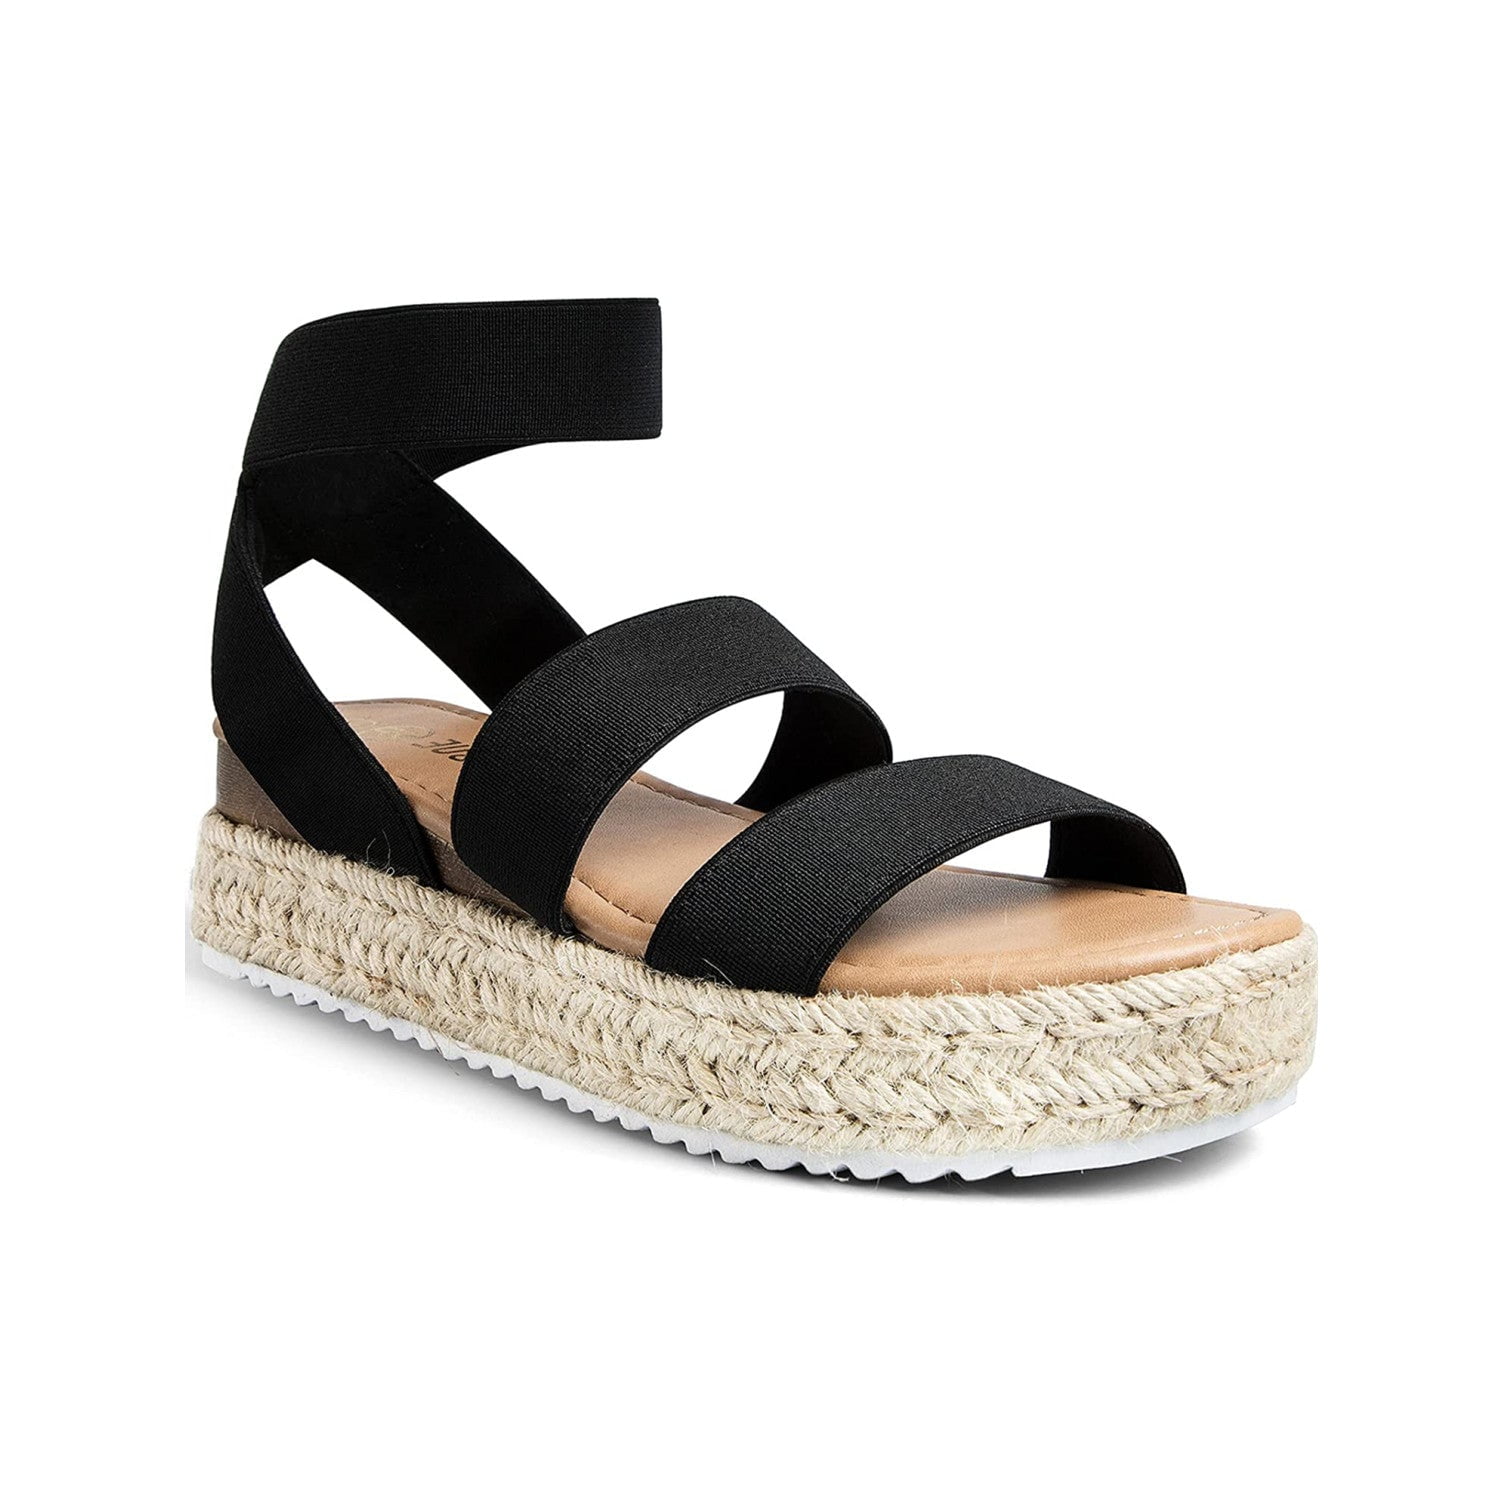 Black Strappy BOHO Platform Wedge Sandals Summer FESTIVAL sizes 6-10 M NEW 